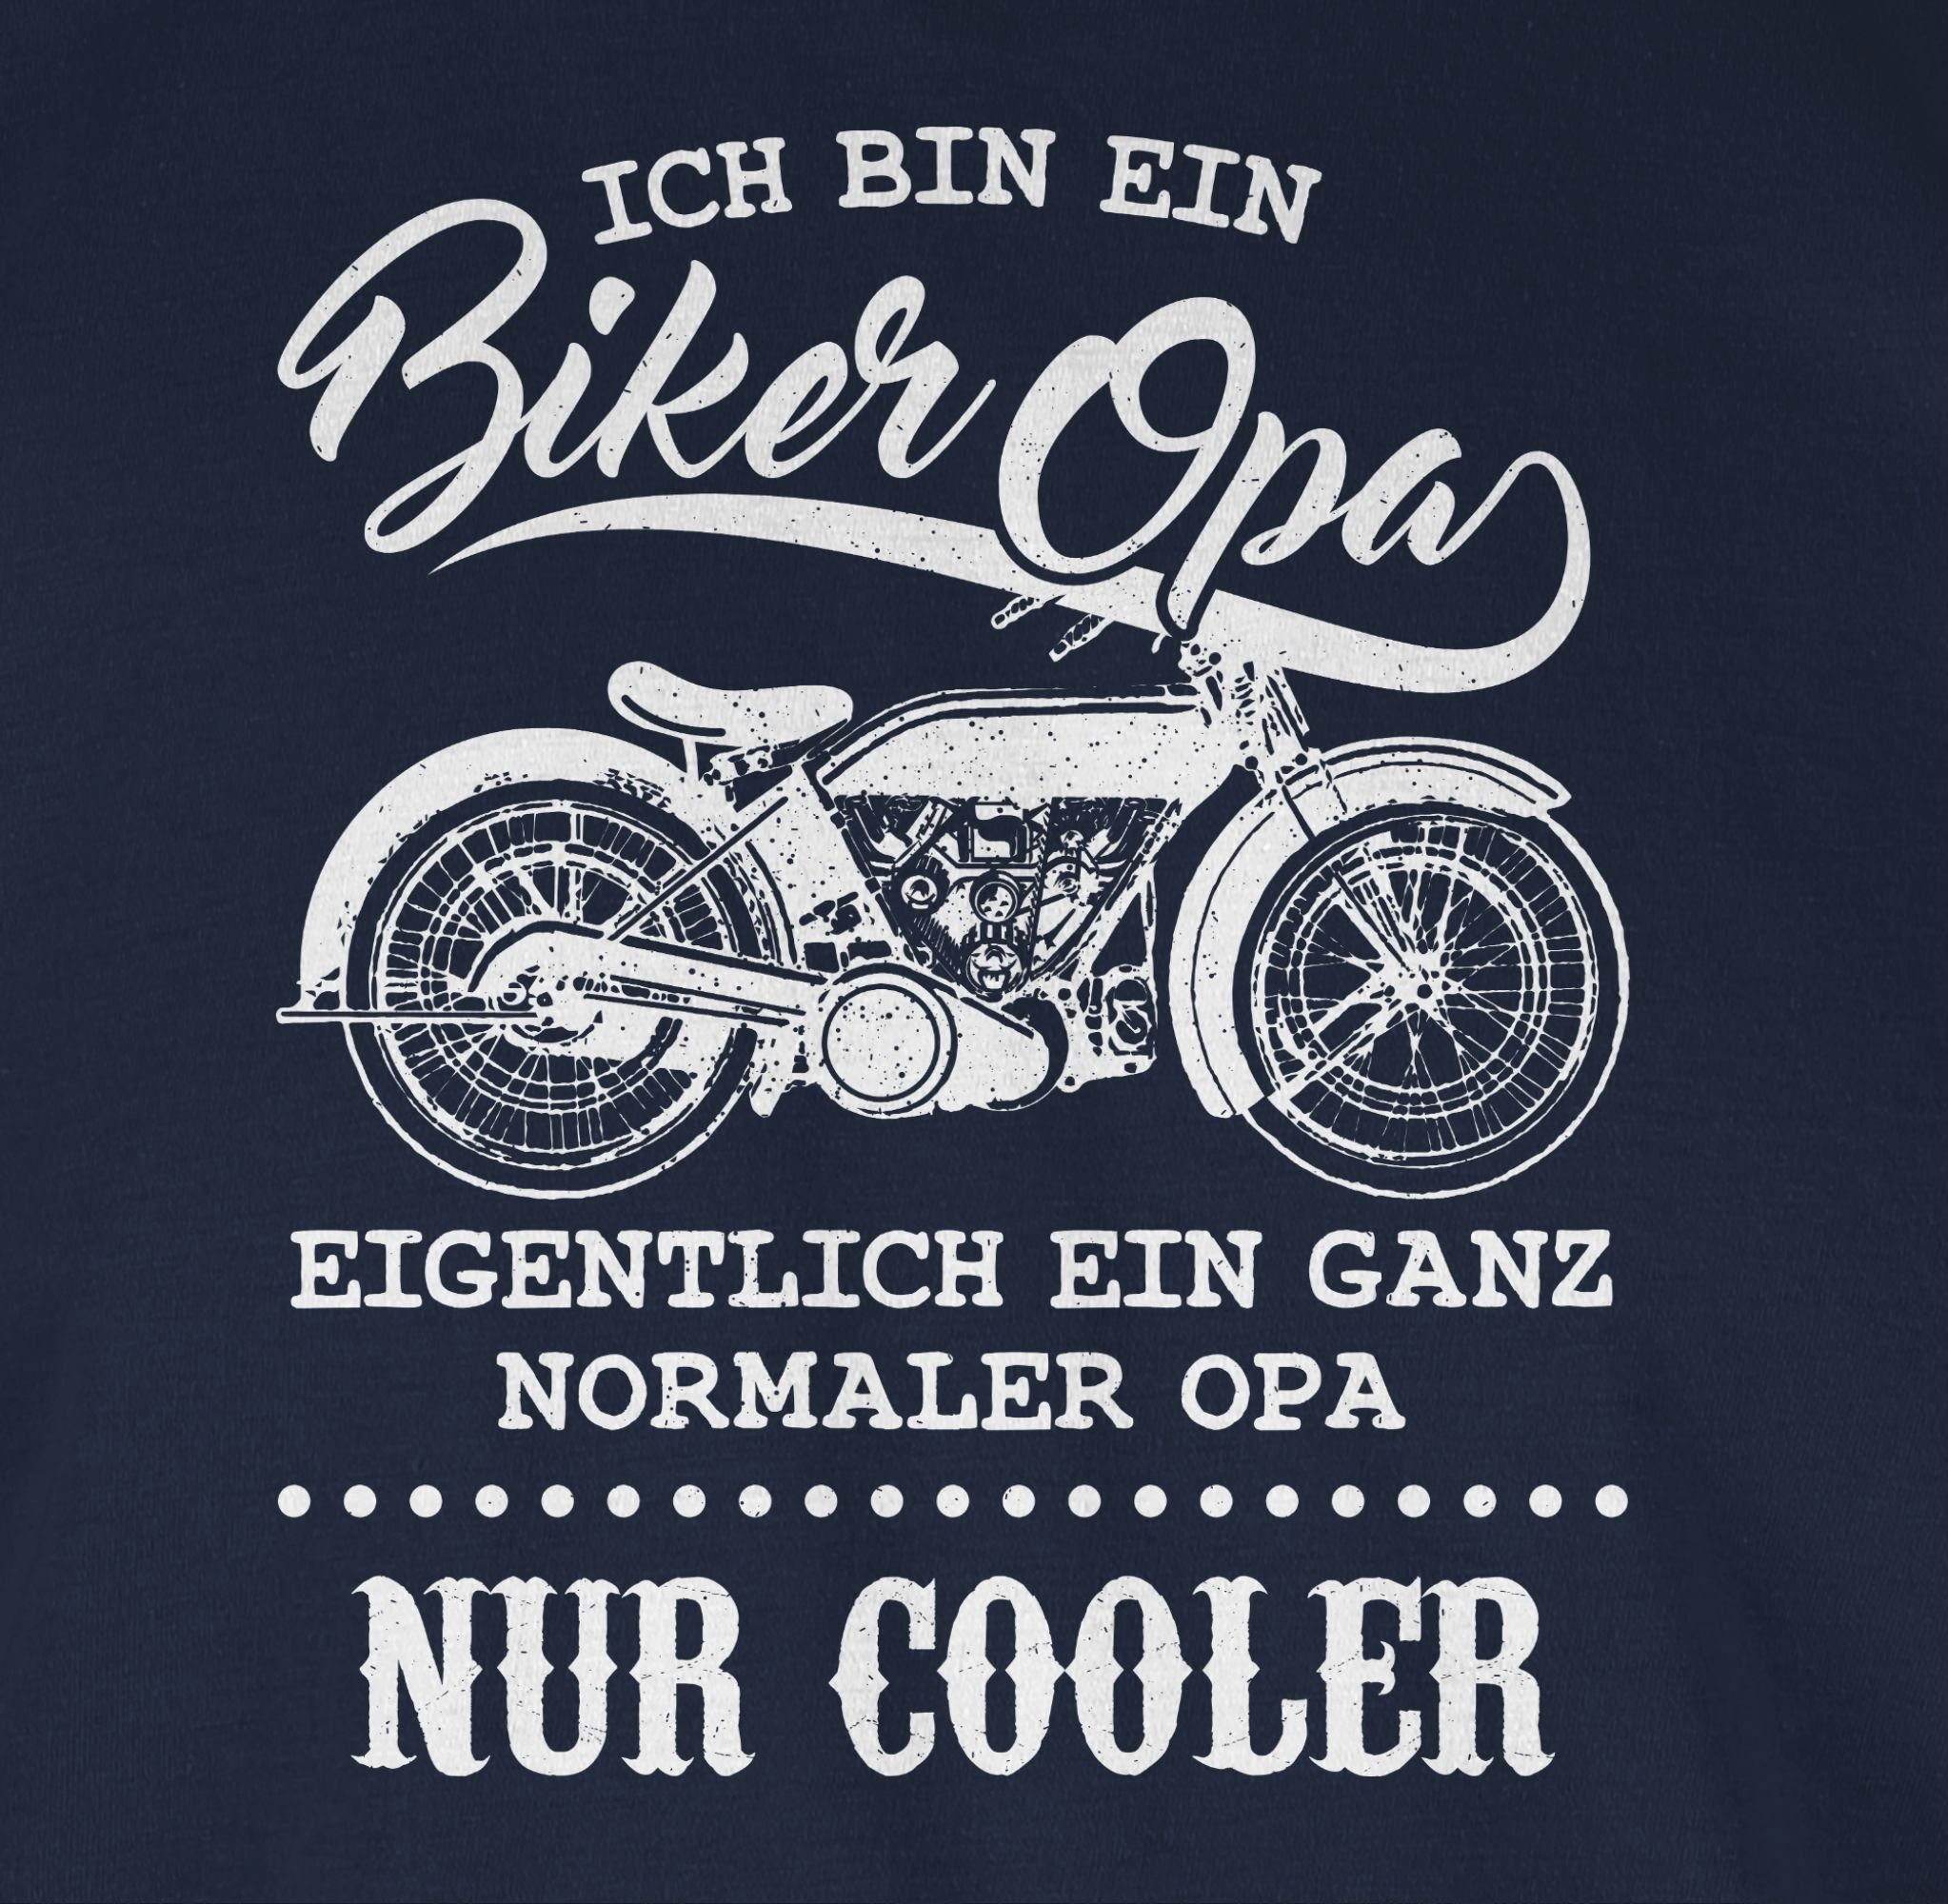 Shirtracer T-Shirt Ich Opa Blau Biker bin ein 03 Navy Motorrad Geschenke Opa Opi